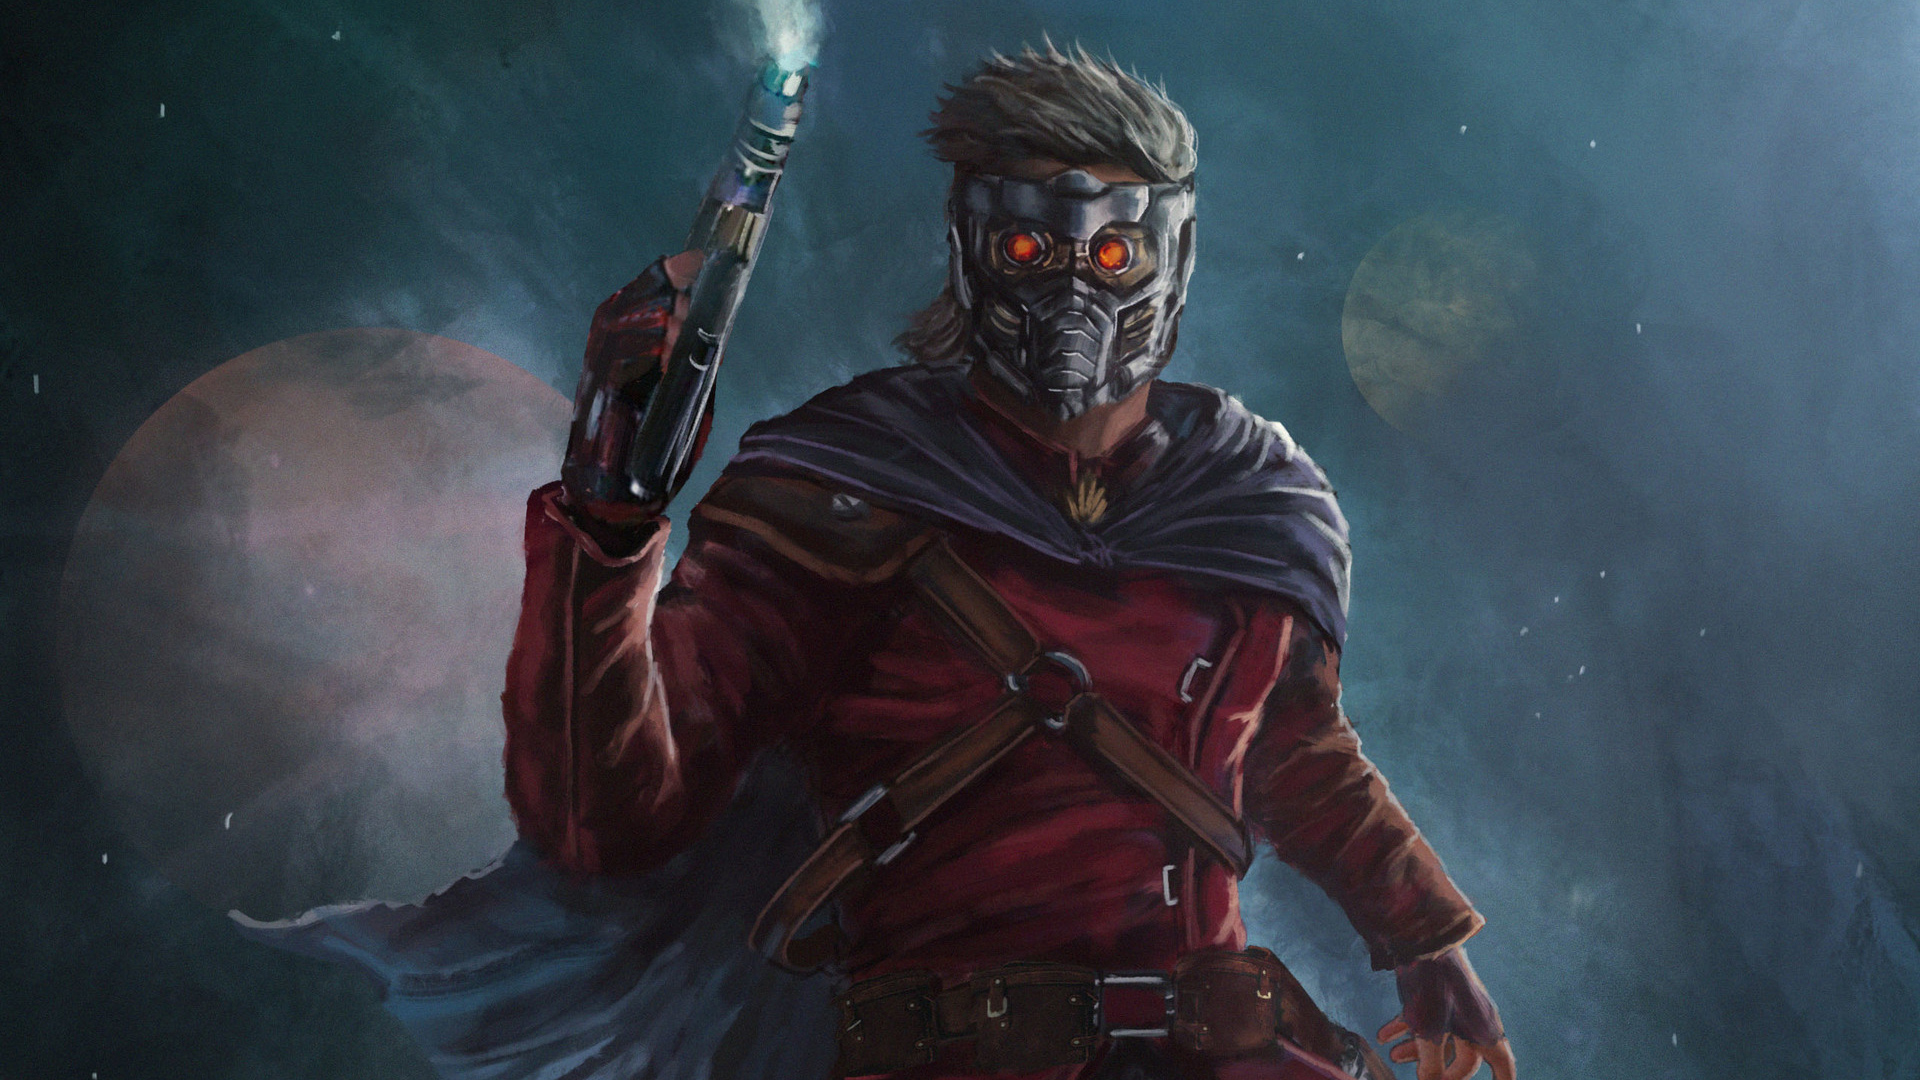 Wallpaper Of Guardians Of The Galaxy, Marvel Comics, - Mcu Star Lord Concept Art - HD Wallpaper 